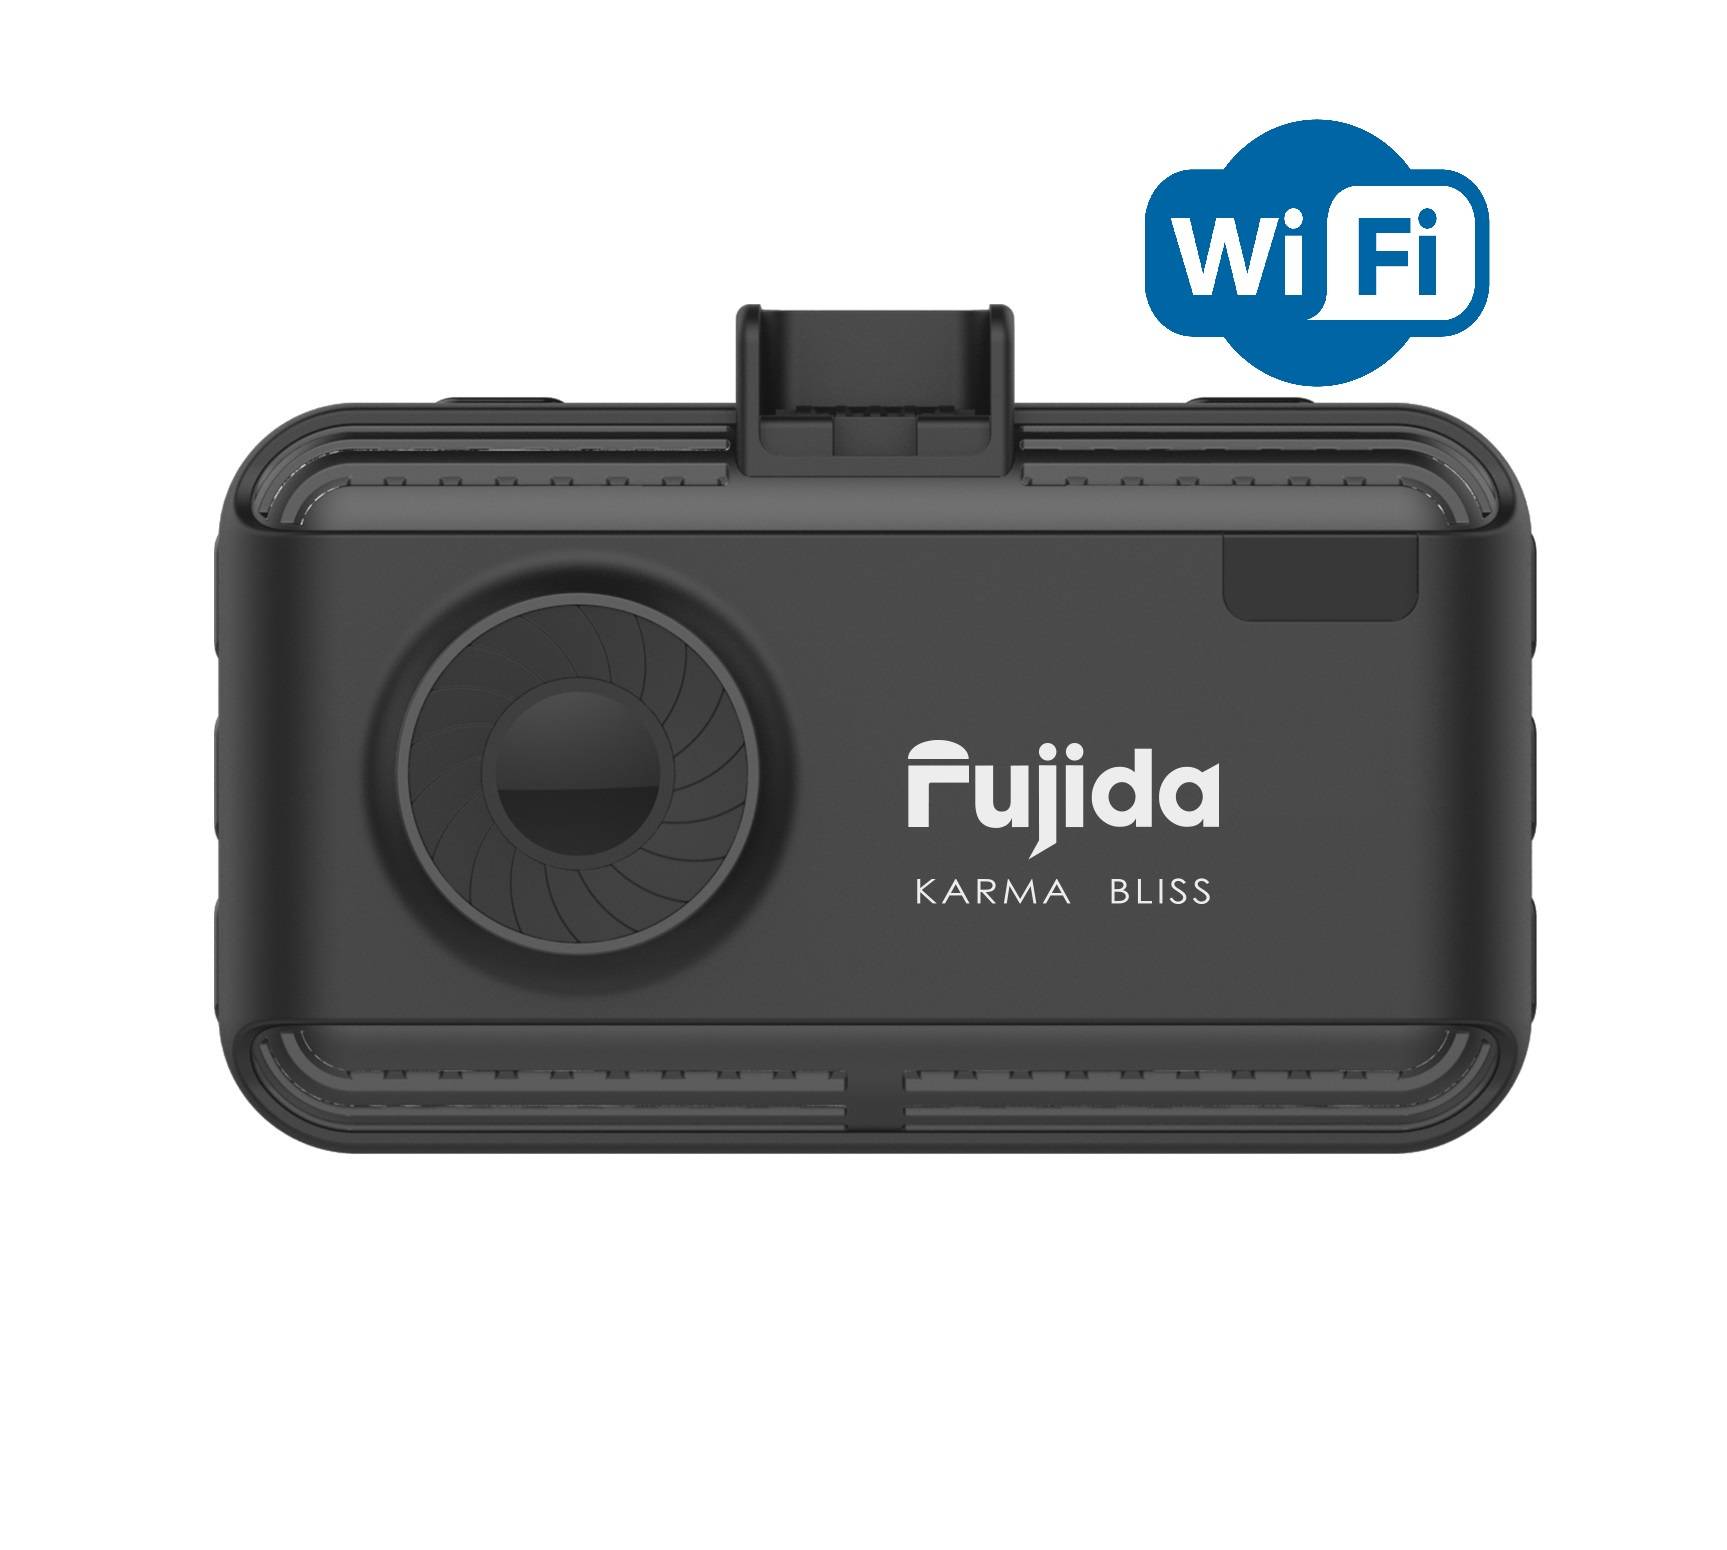 Fujida karma bliss s wifi. подробный обзор комбо-устройства | автоблог